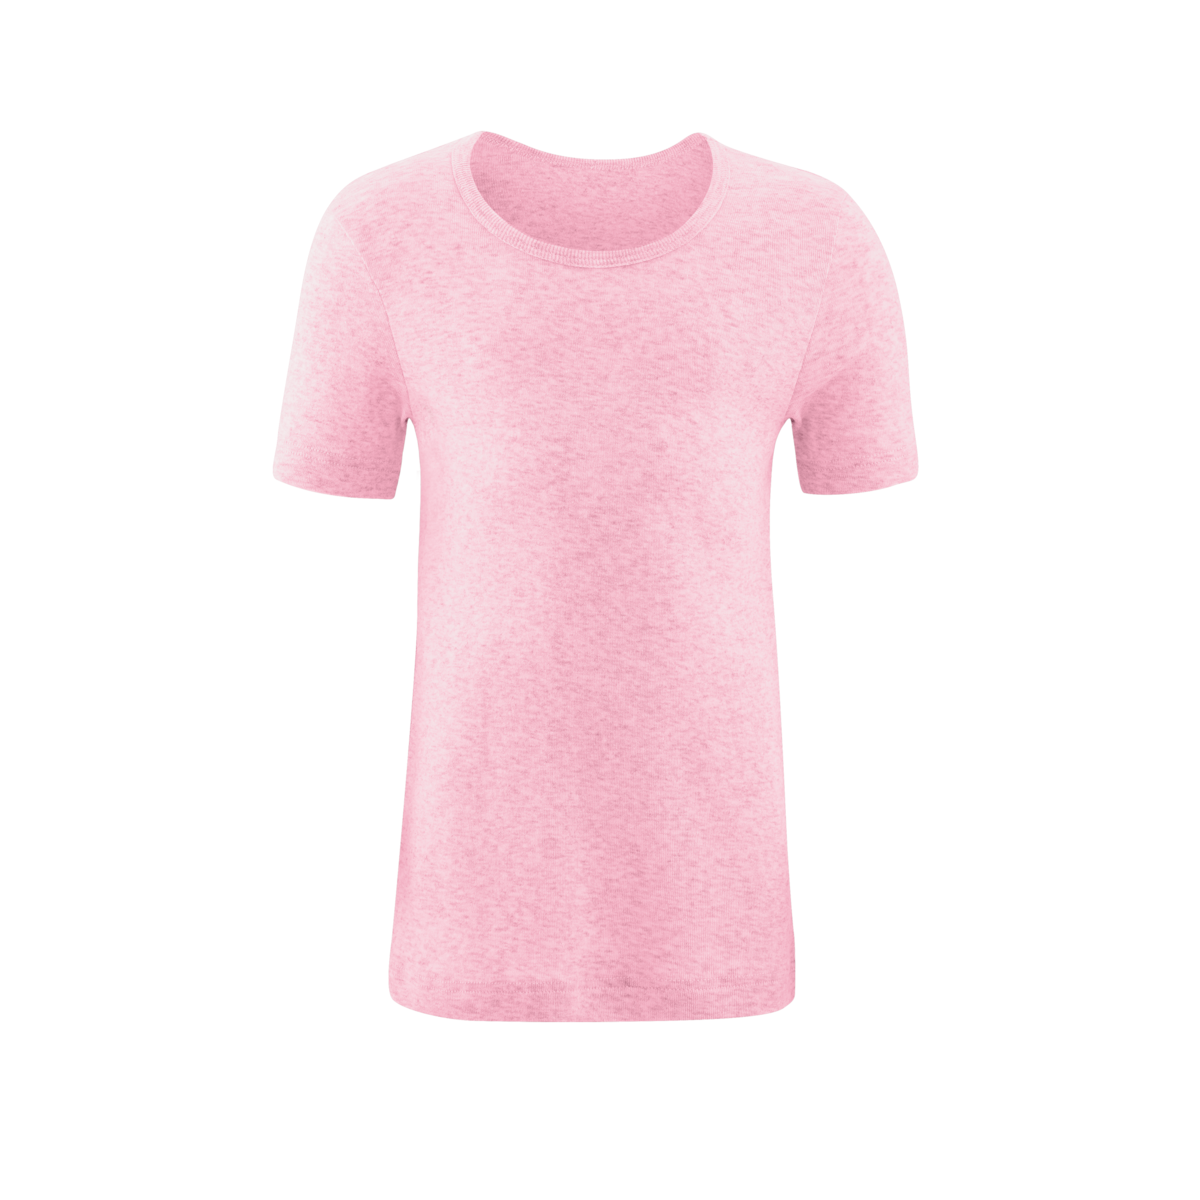 Pinke Kurzarm-Shirt GOAT